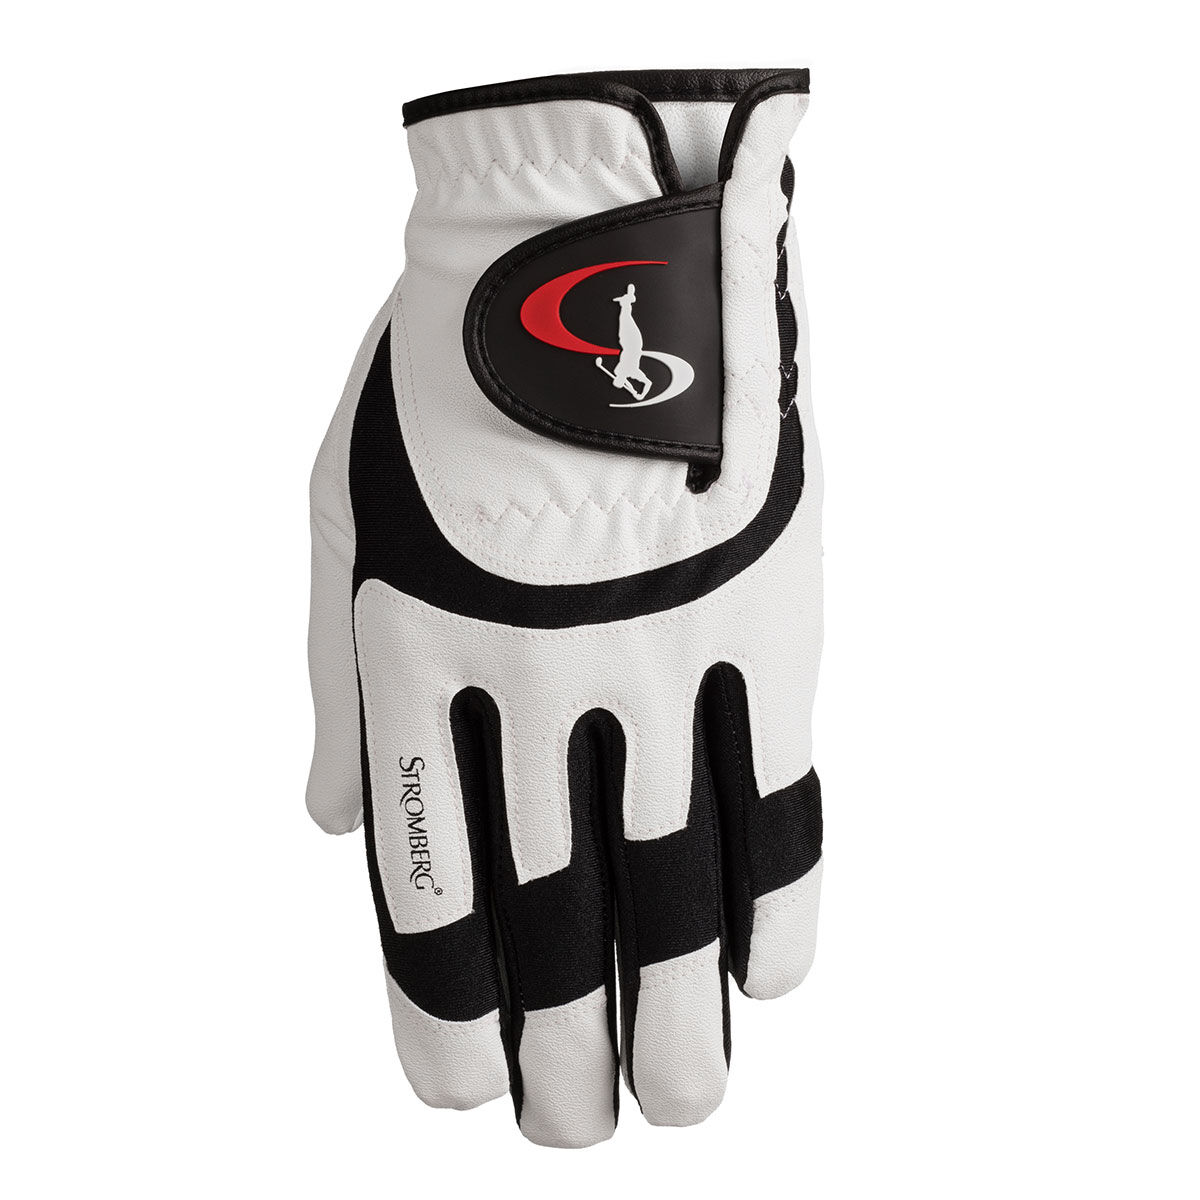 Lot de 3 gants premium toutes saisons Stromberg, homme, Left hand, Small, White/black  | Online Golf